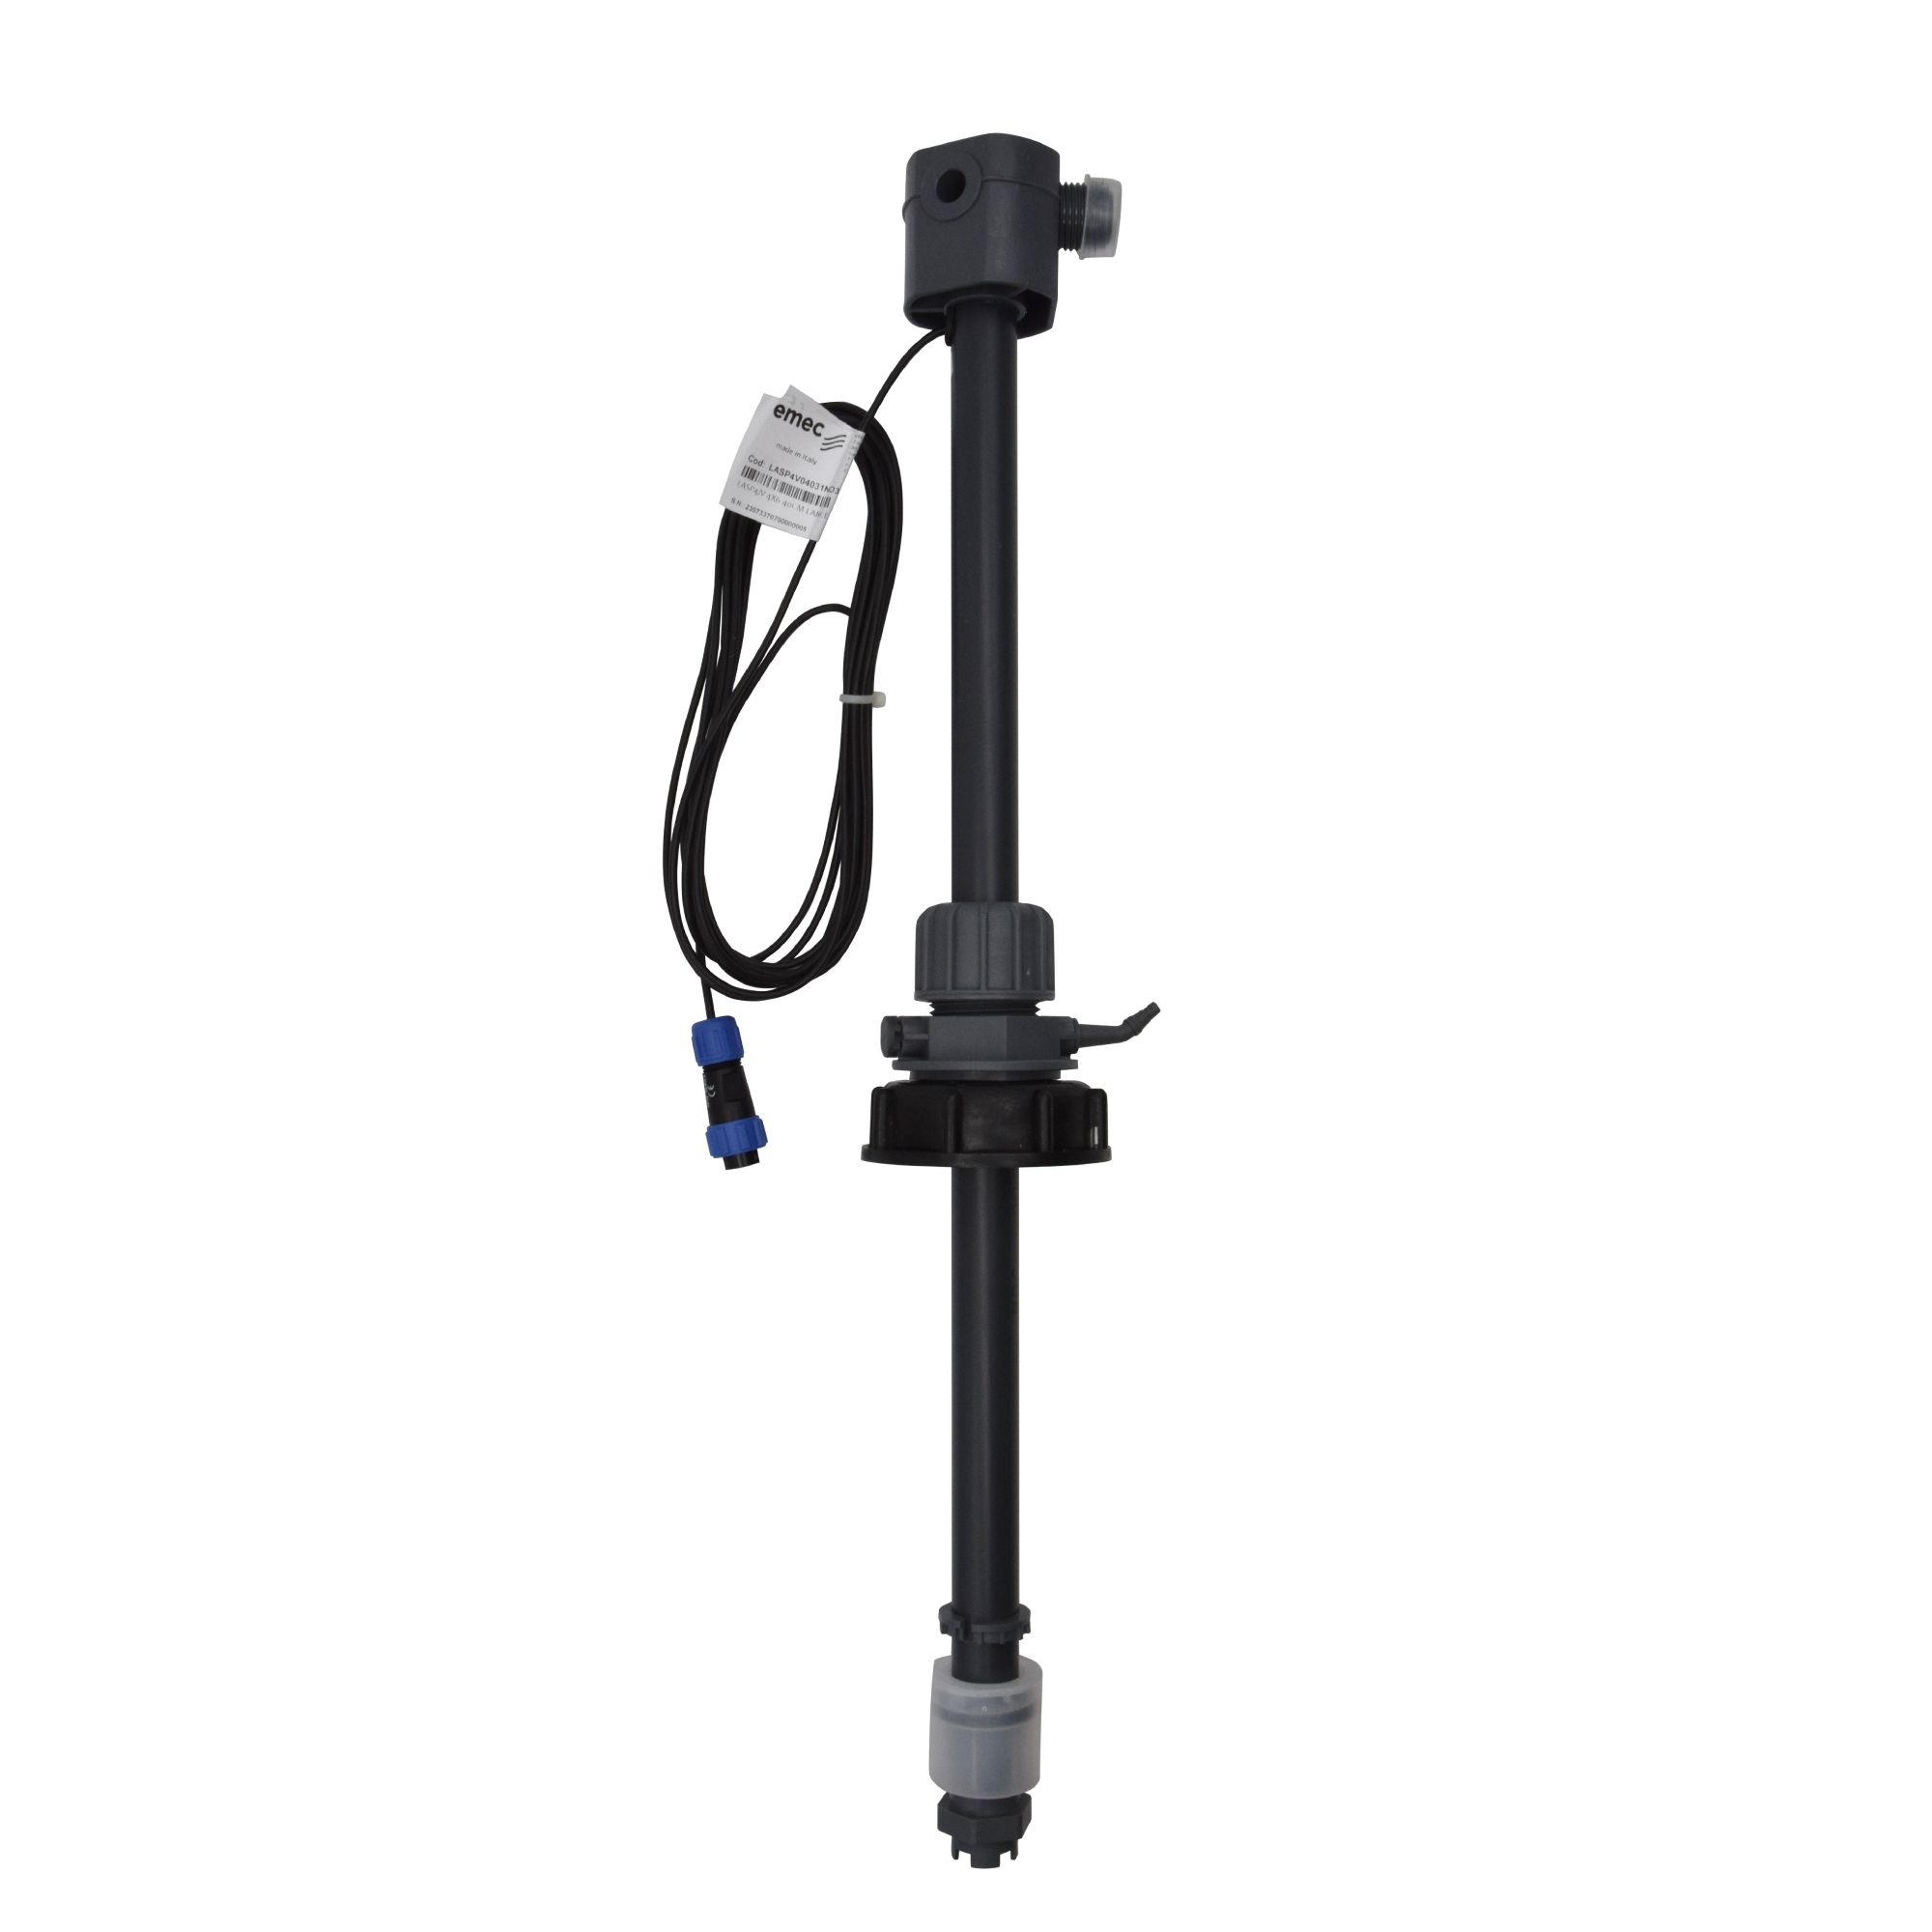 emec Viton suction lance with 122cm immersion length (LASP4) - M12 plug for connection to Prisma pump